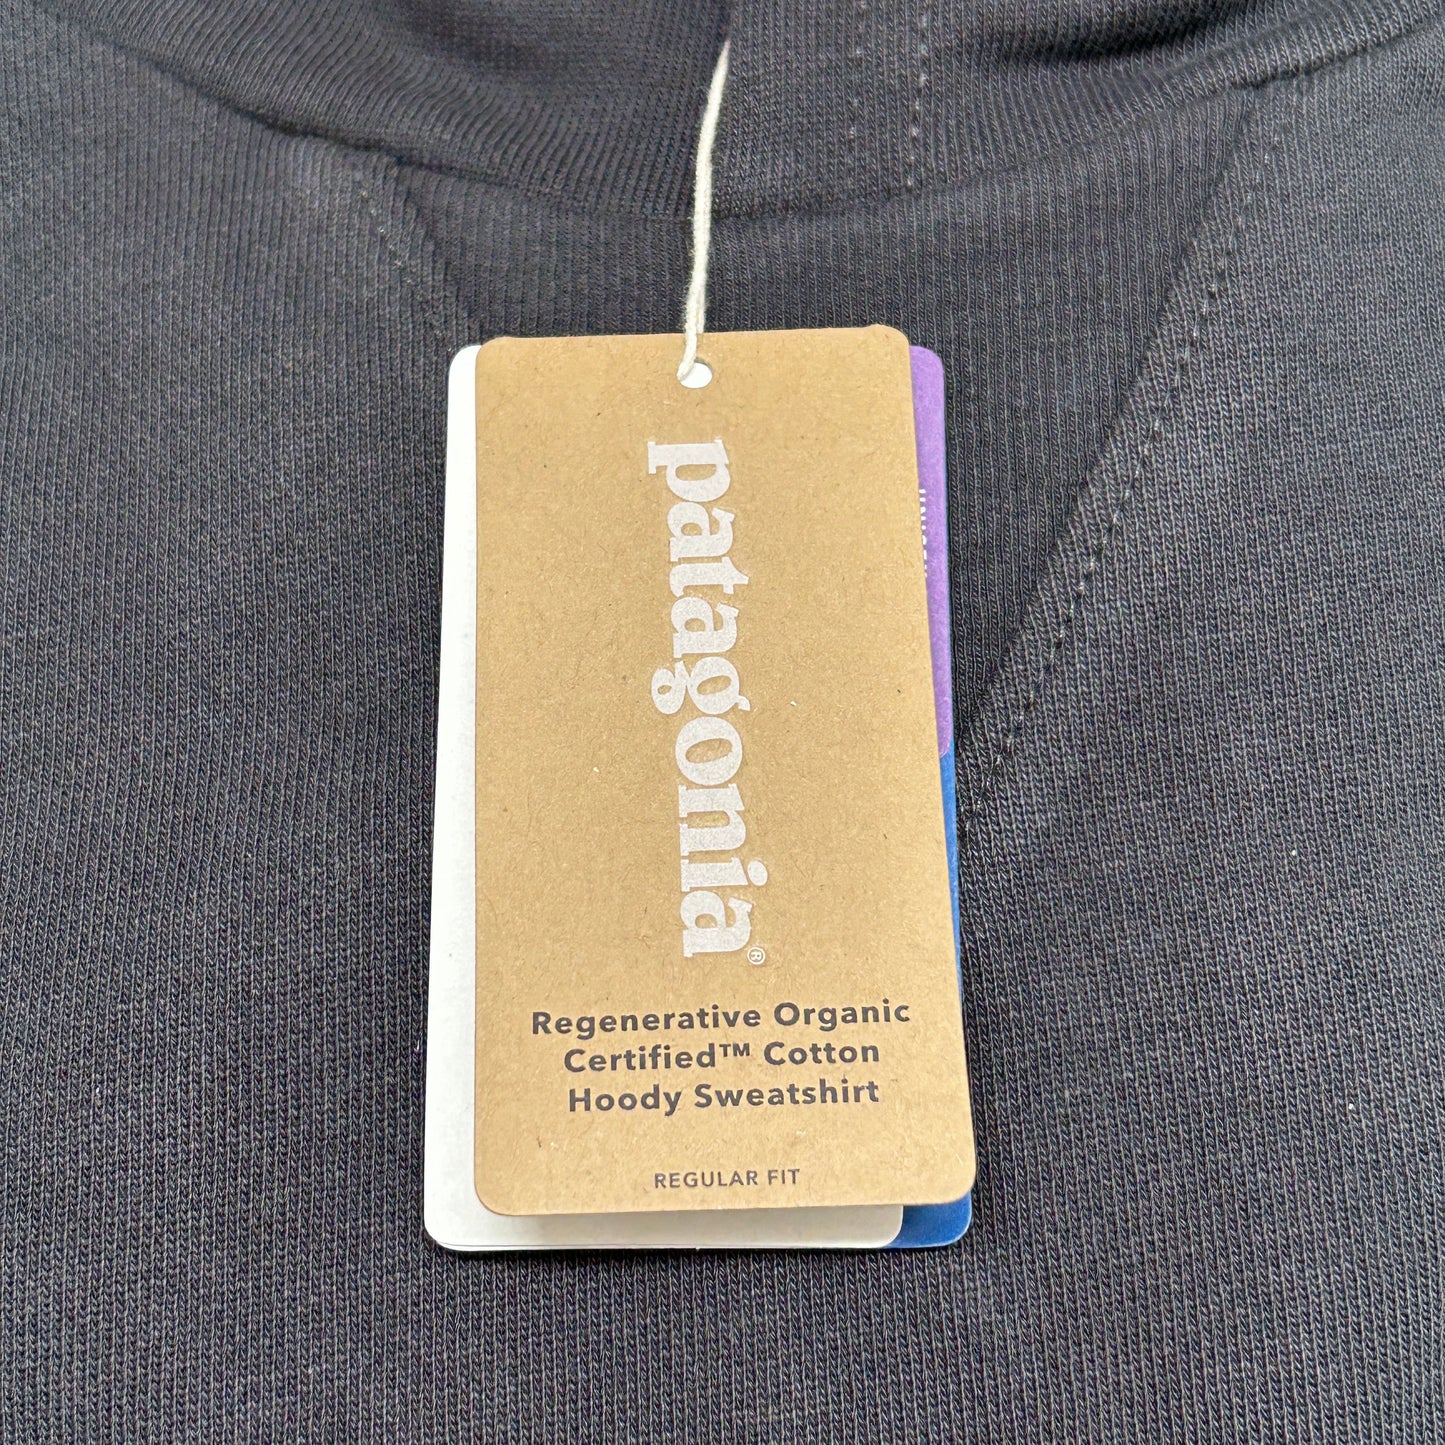 PATAGONIA Regenerative Organic Cotton Hoody Sweatshirt Sz M Ink Black (New)